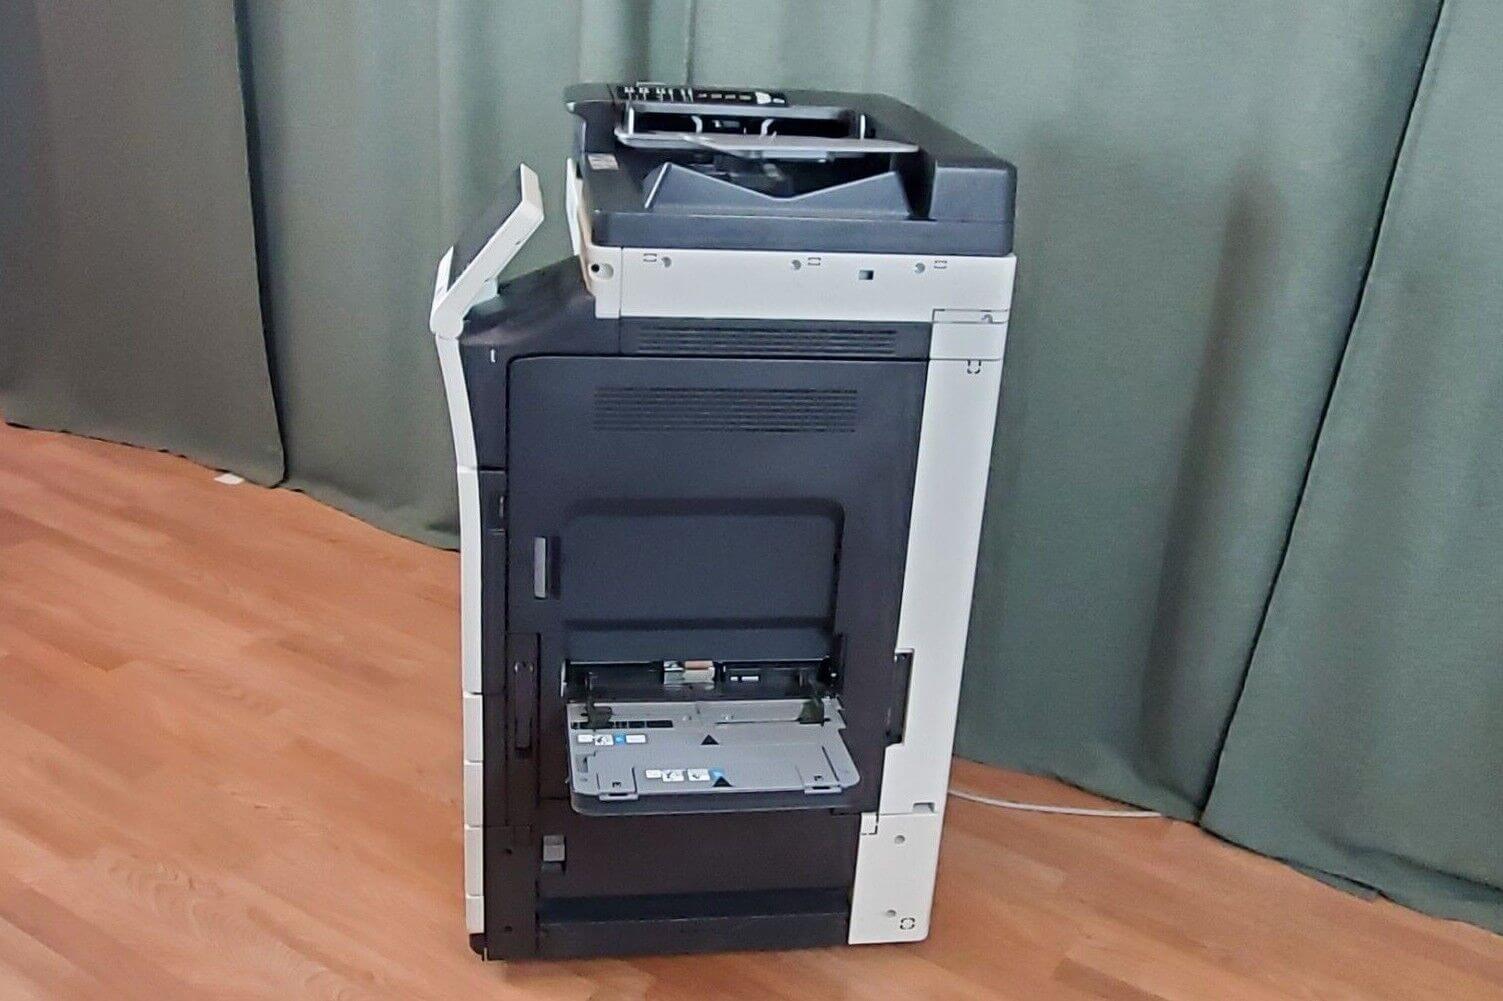 Demo Unit Konica Minolta Bizhub C258 Color Copier Printer Scan Fax Low 16K Usage - copier-clearance-center